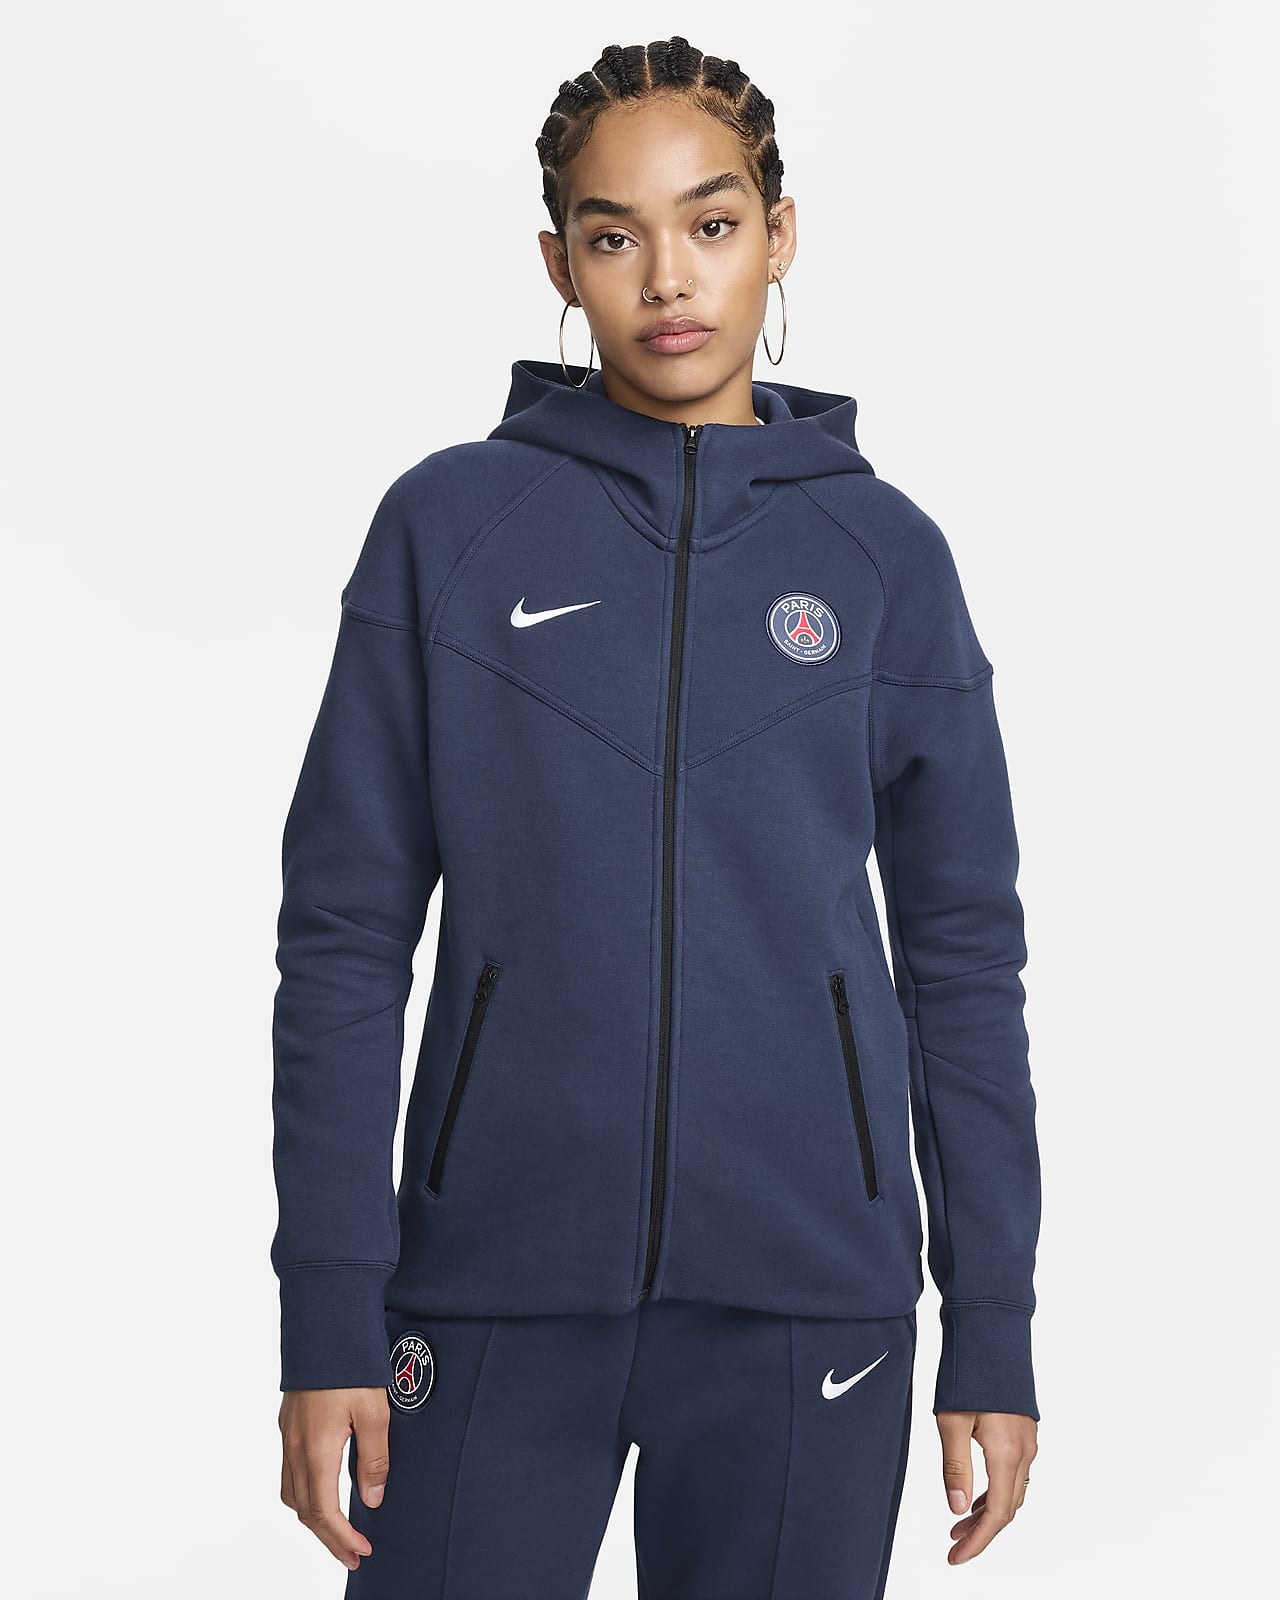 Hoodie de futebol com fecho completo Nike Tech Fleece Windrunner Paris Saint-Germain para mulher